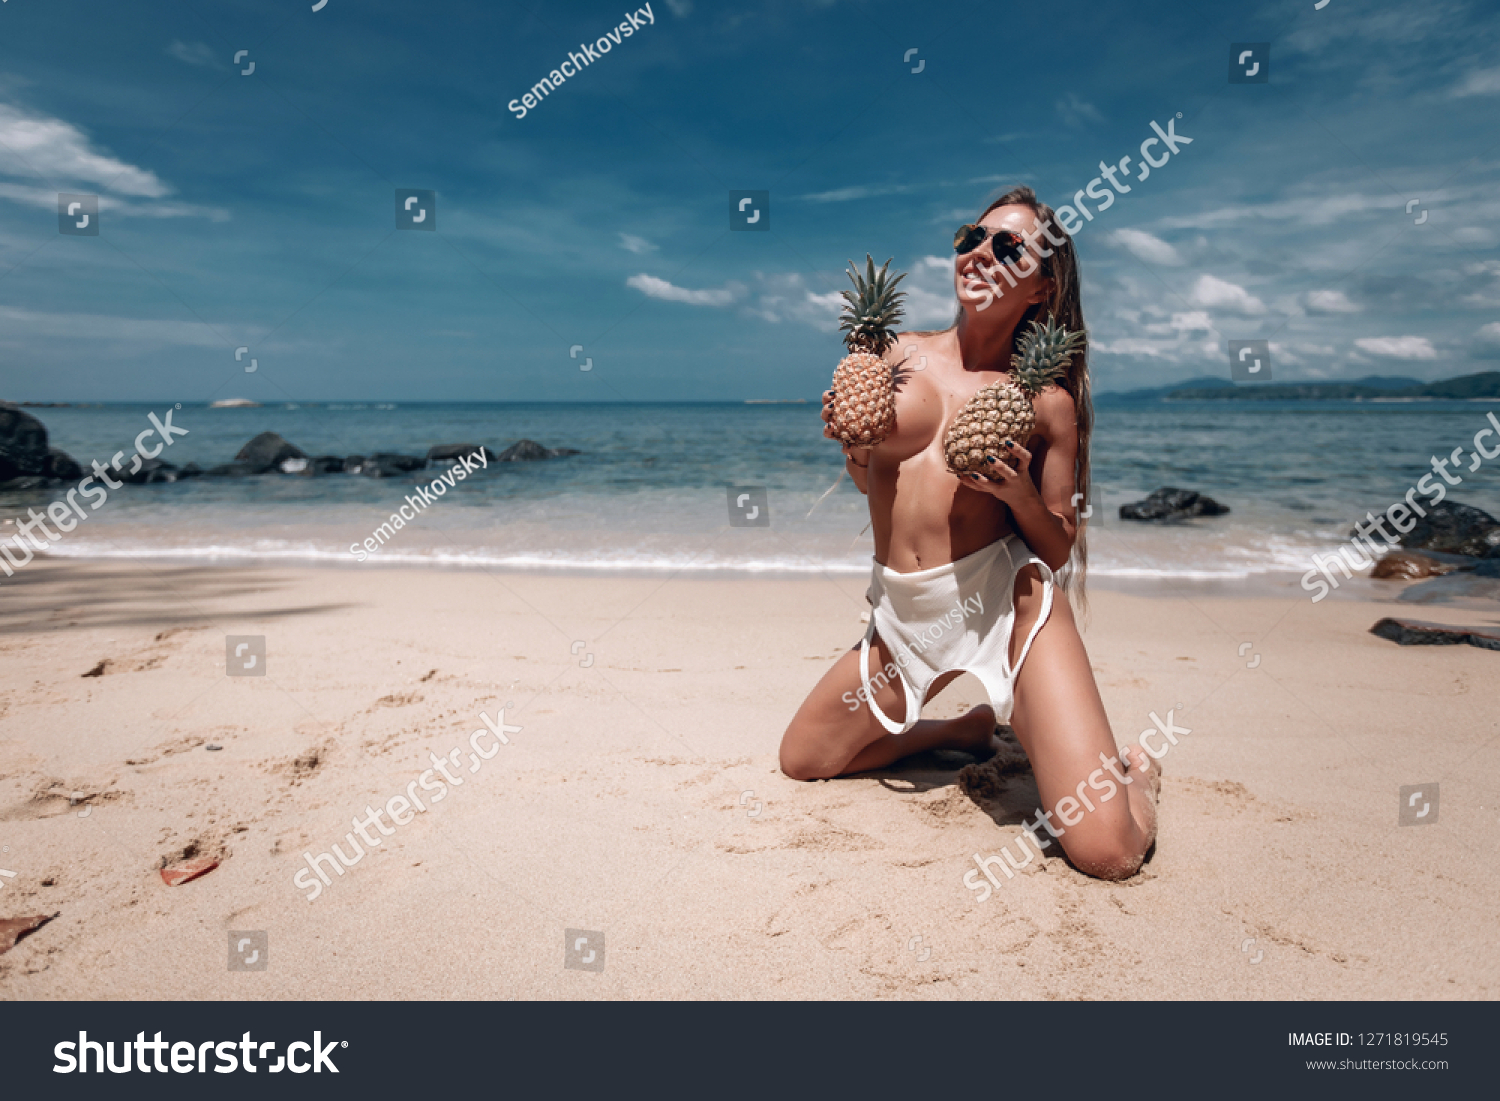 Girl beach nude 